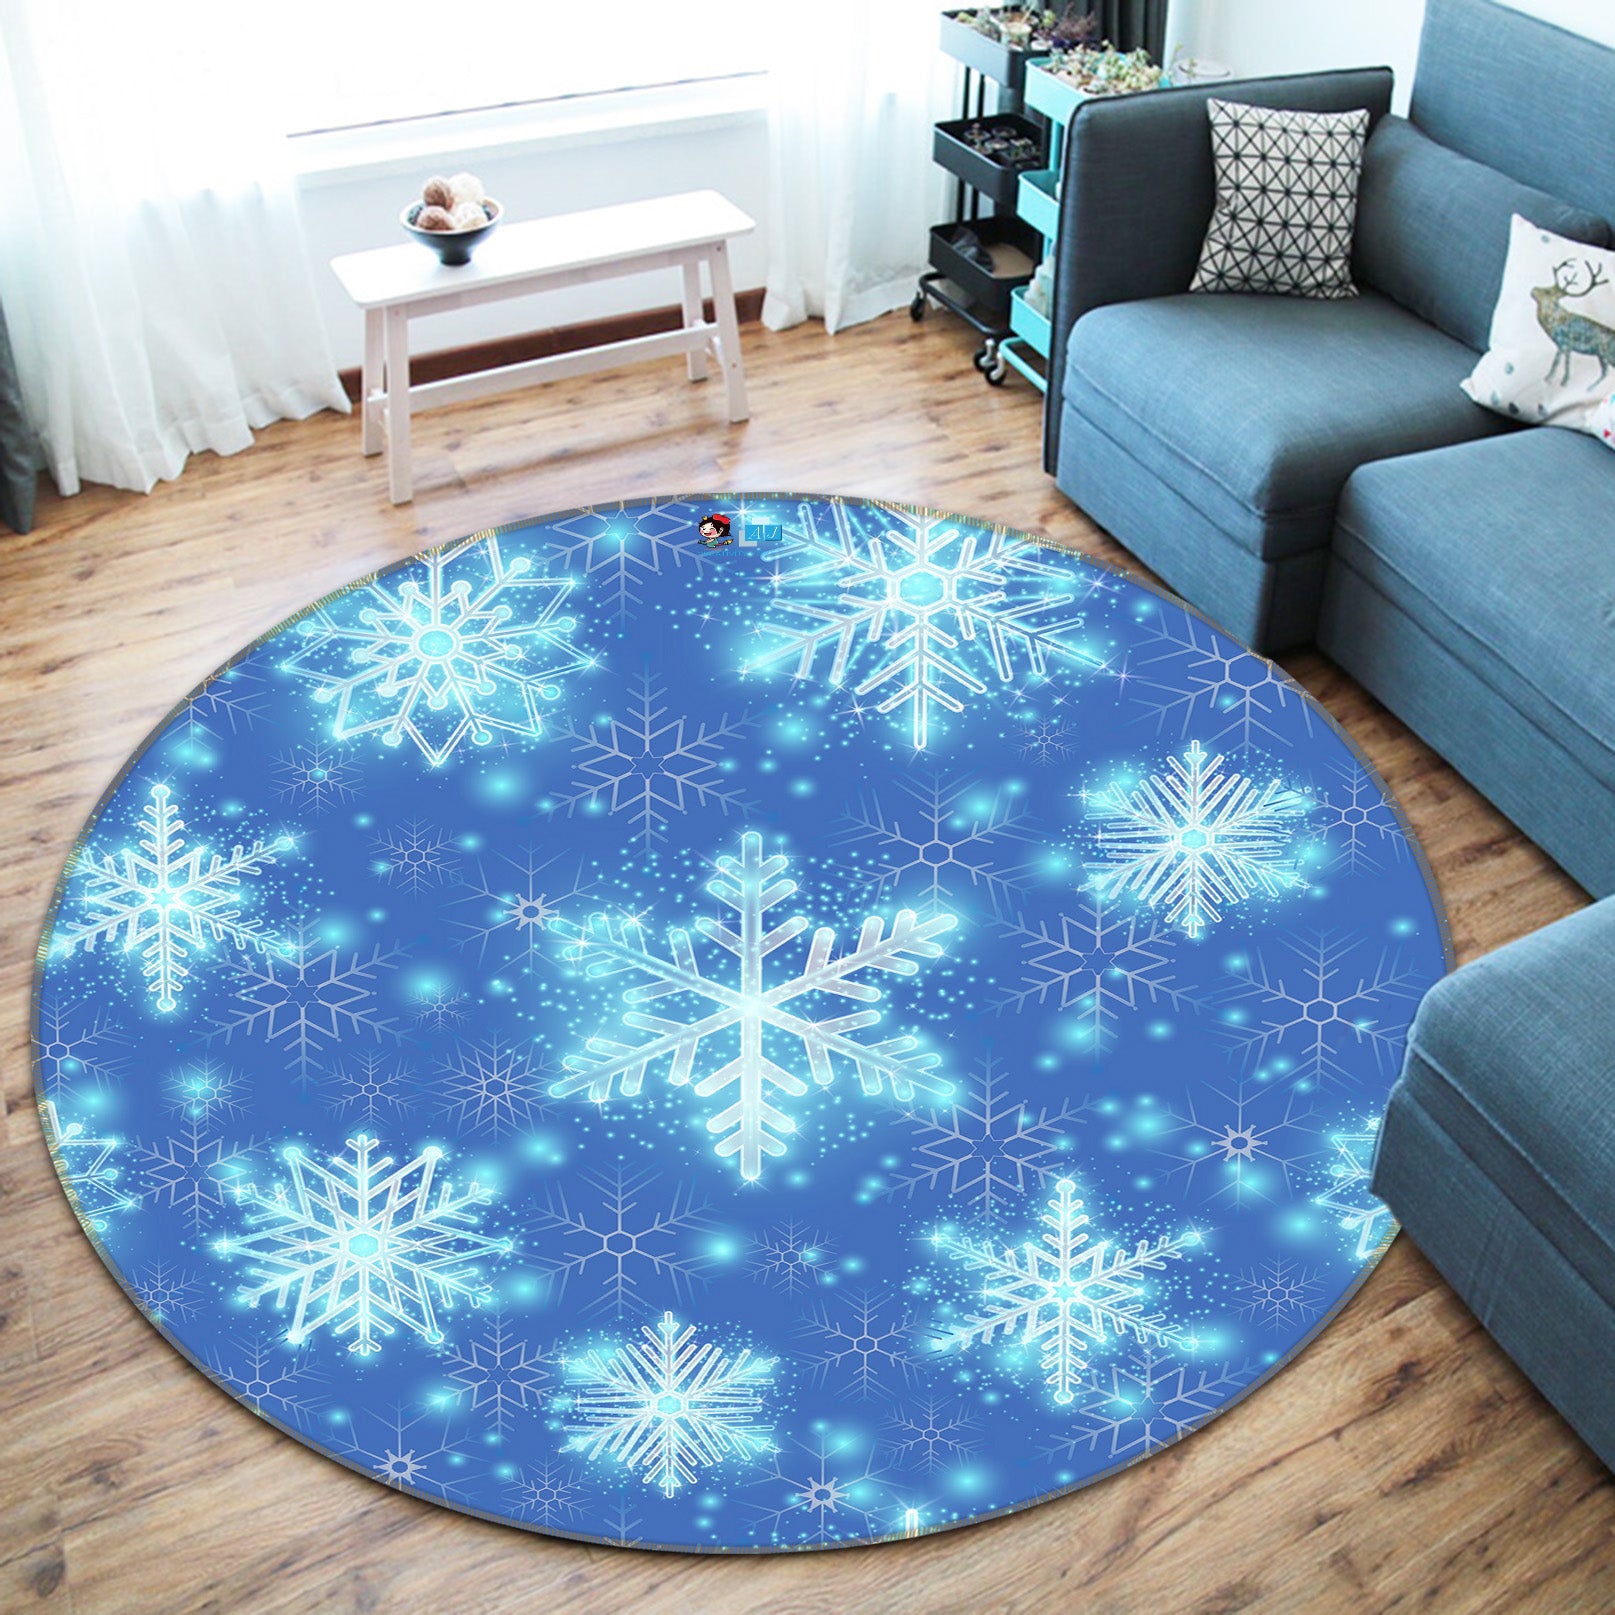 3D Blue Snowflakes 54111 Christmas Round Non Slip Rug Mat Xmas